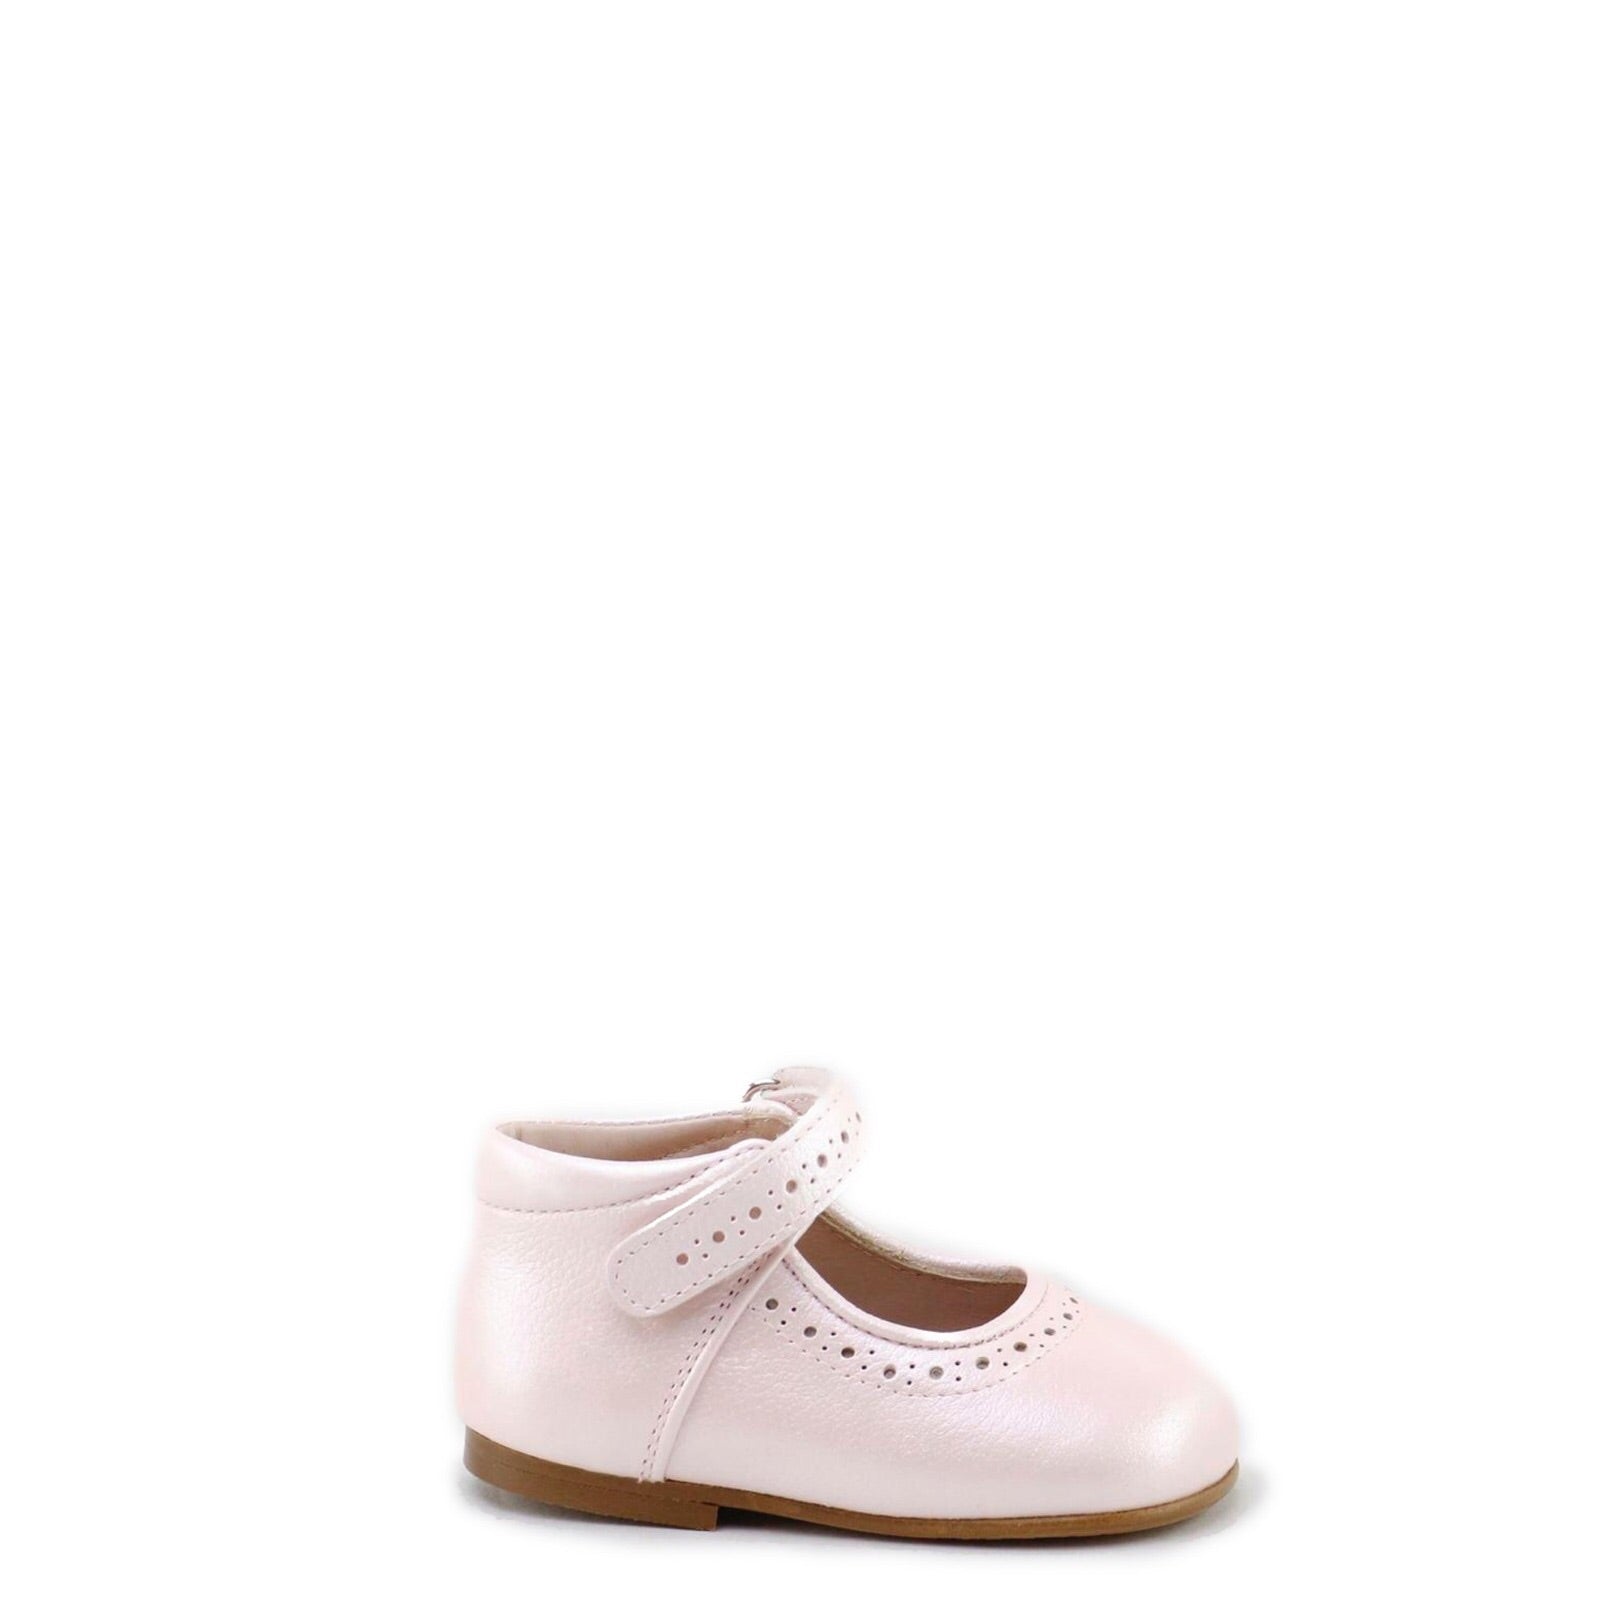 Papanatas Pale Pink Pebbled Baby Shoe - Tassel Shoes